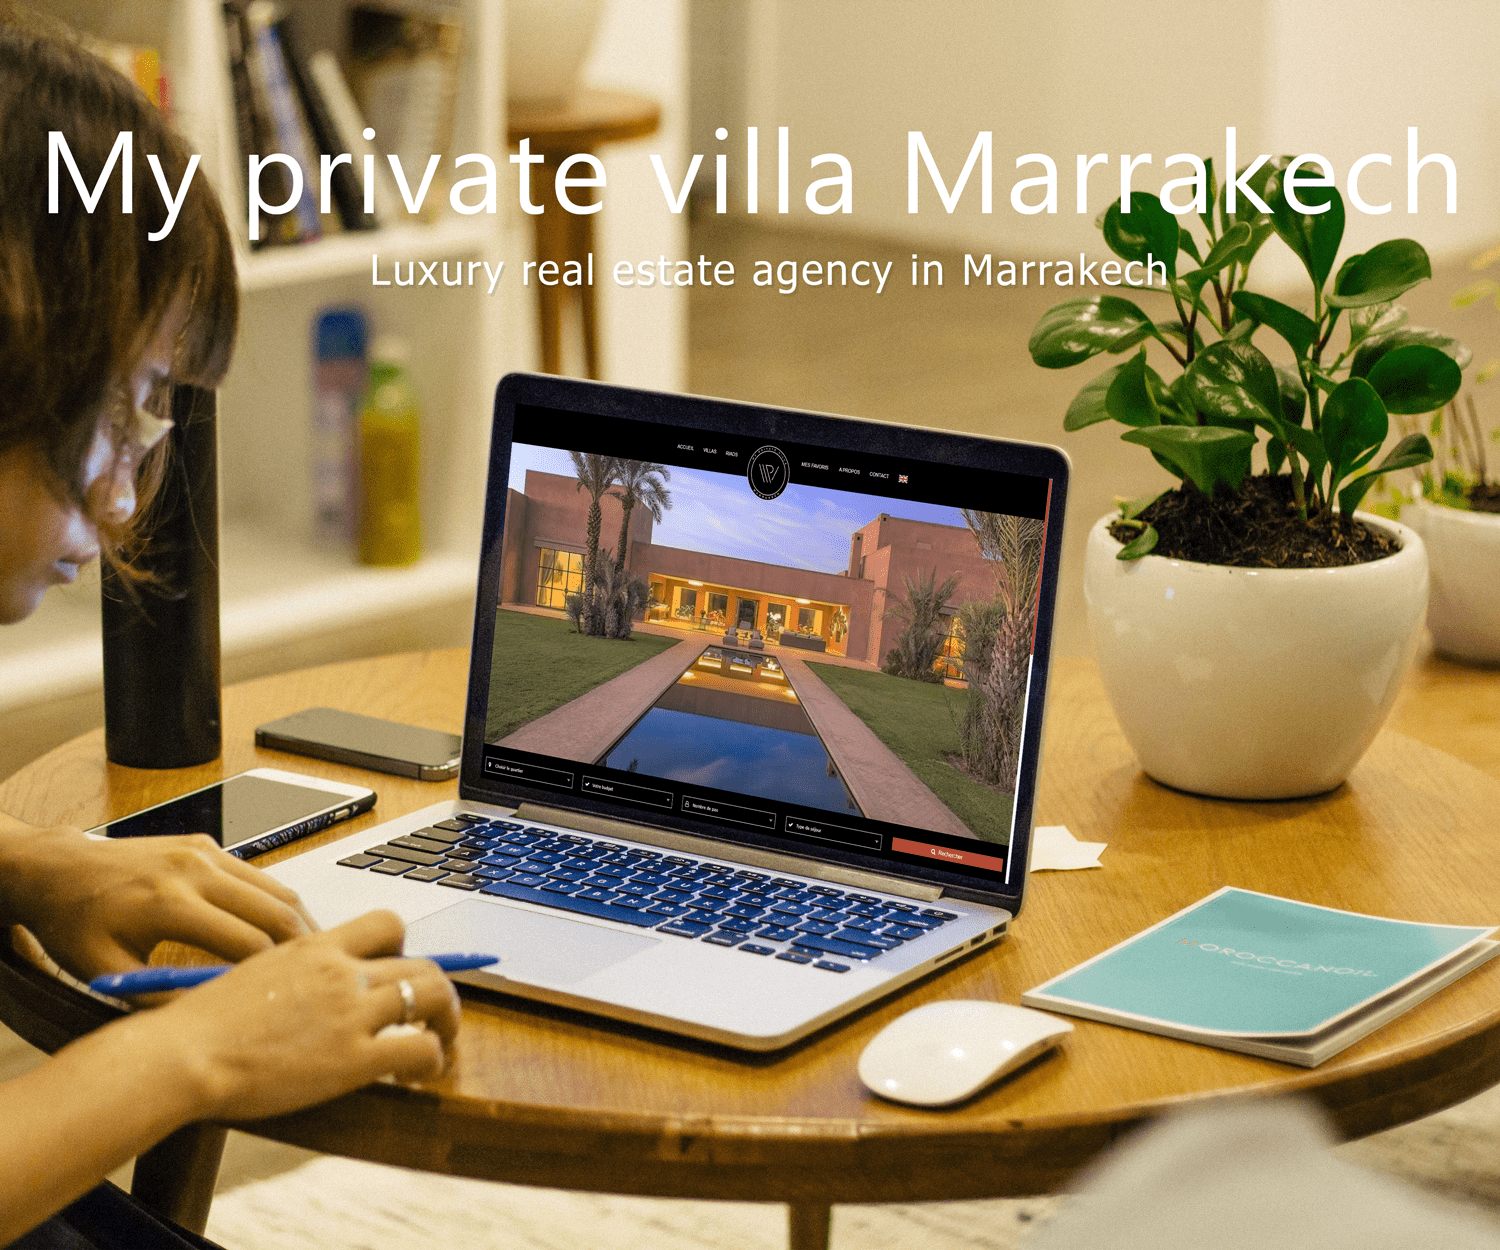 My private villa – Luxury real estate agency